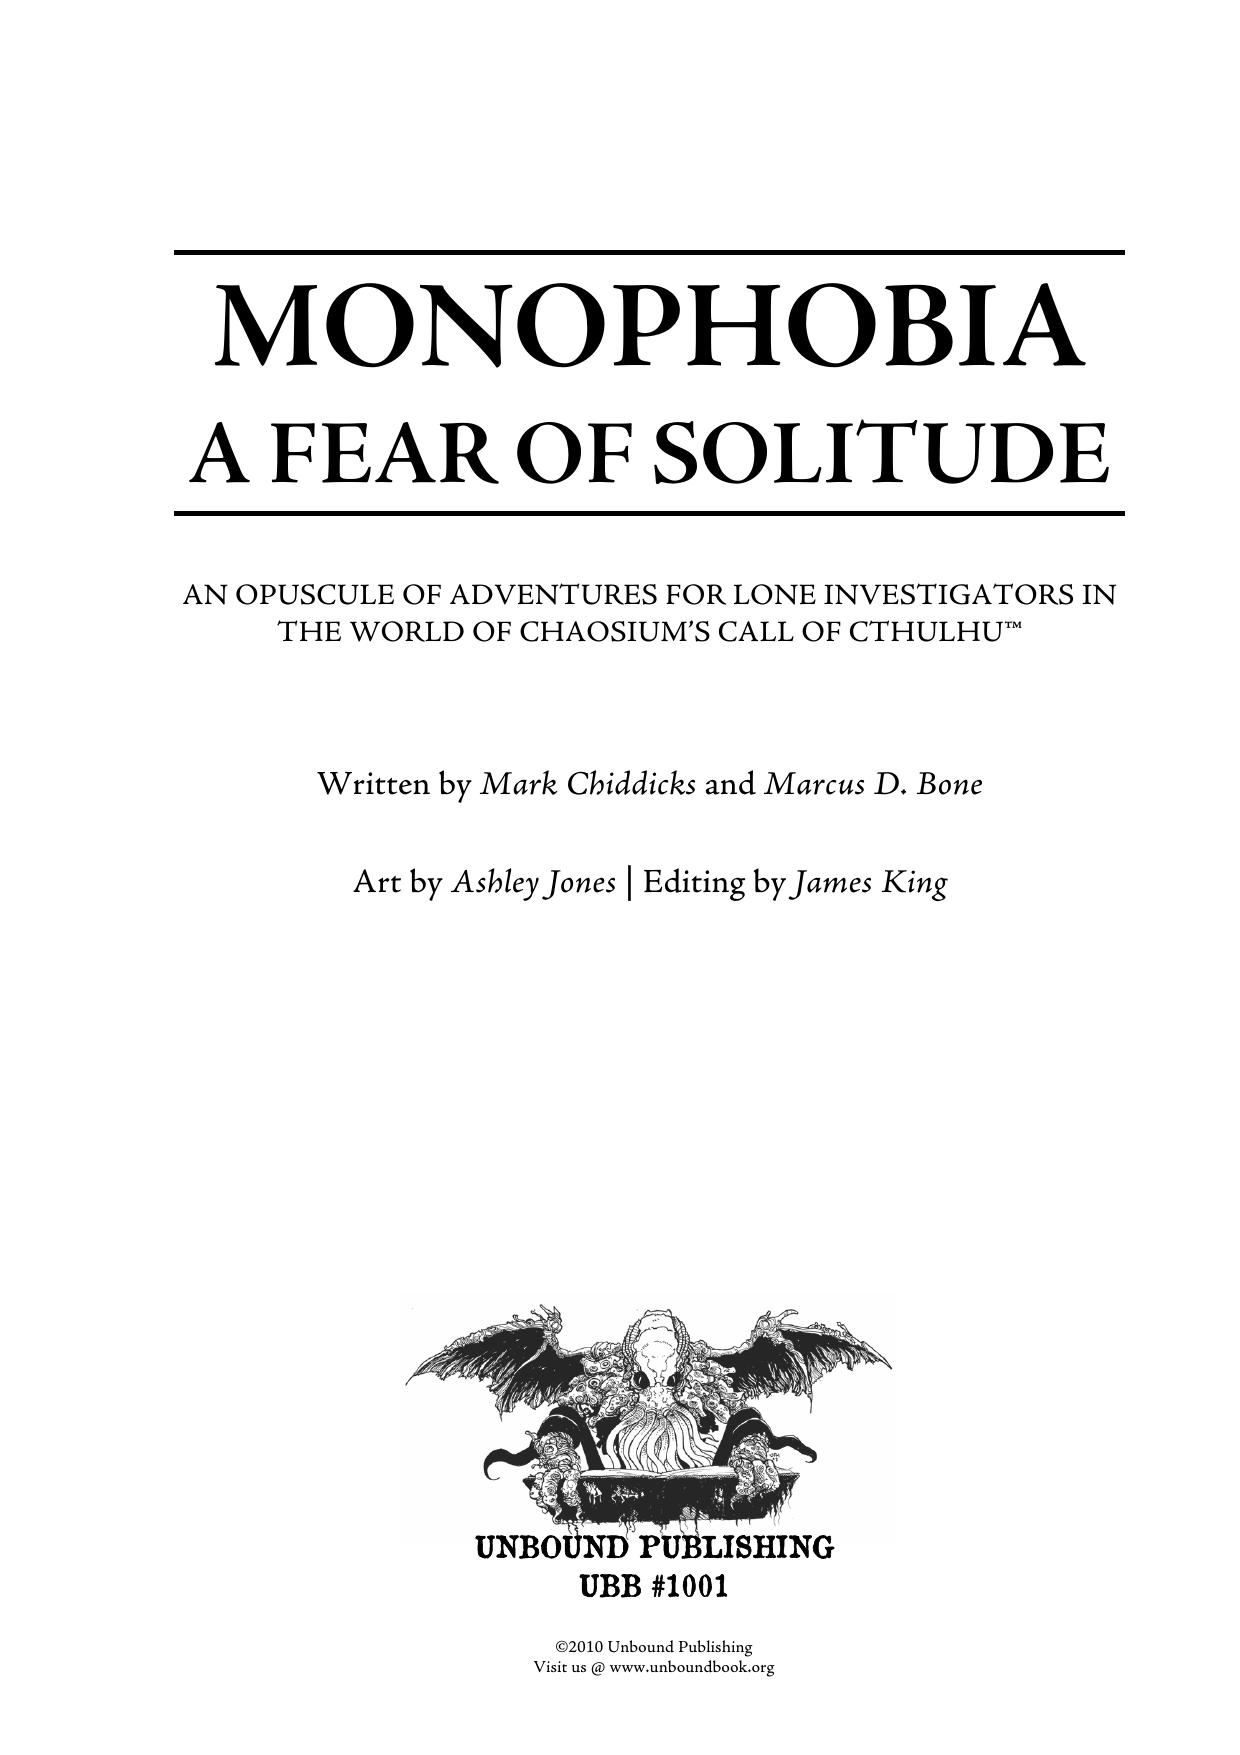 Microsoft Word - Monophobia_Cover_June_2010.doc